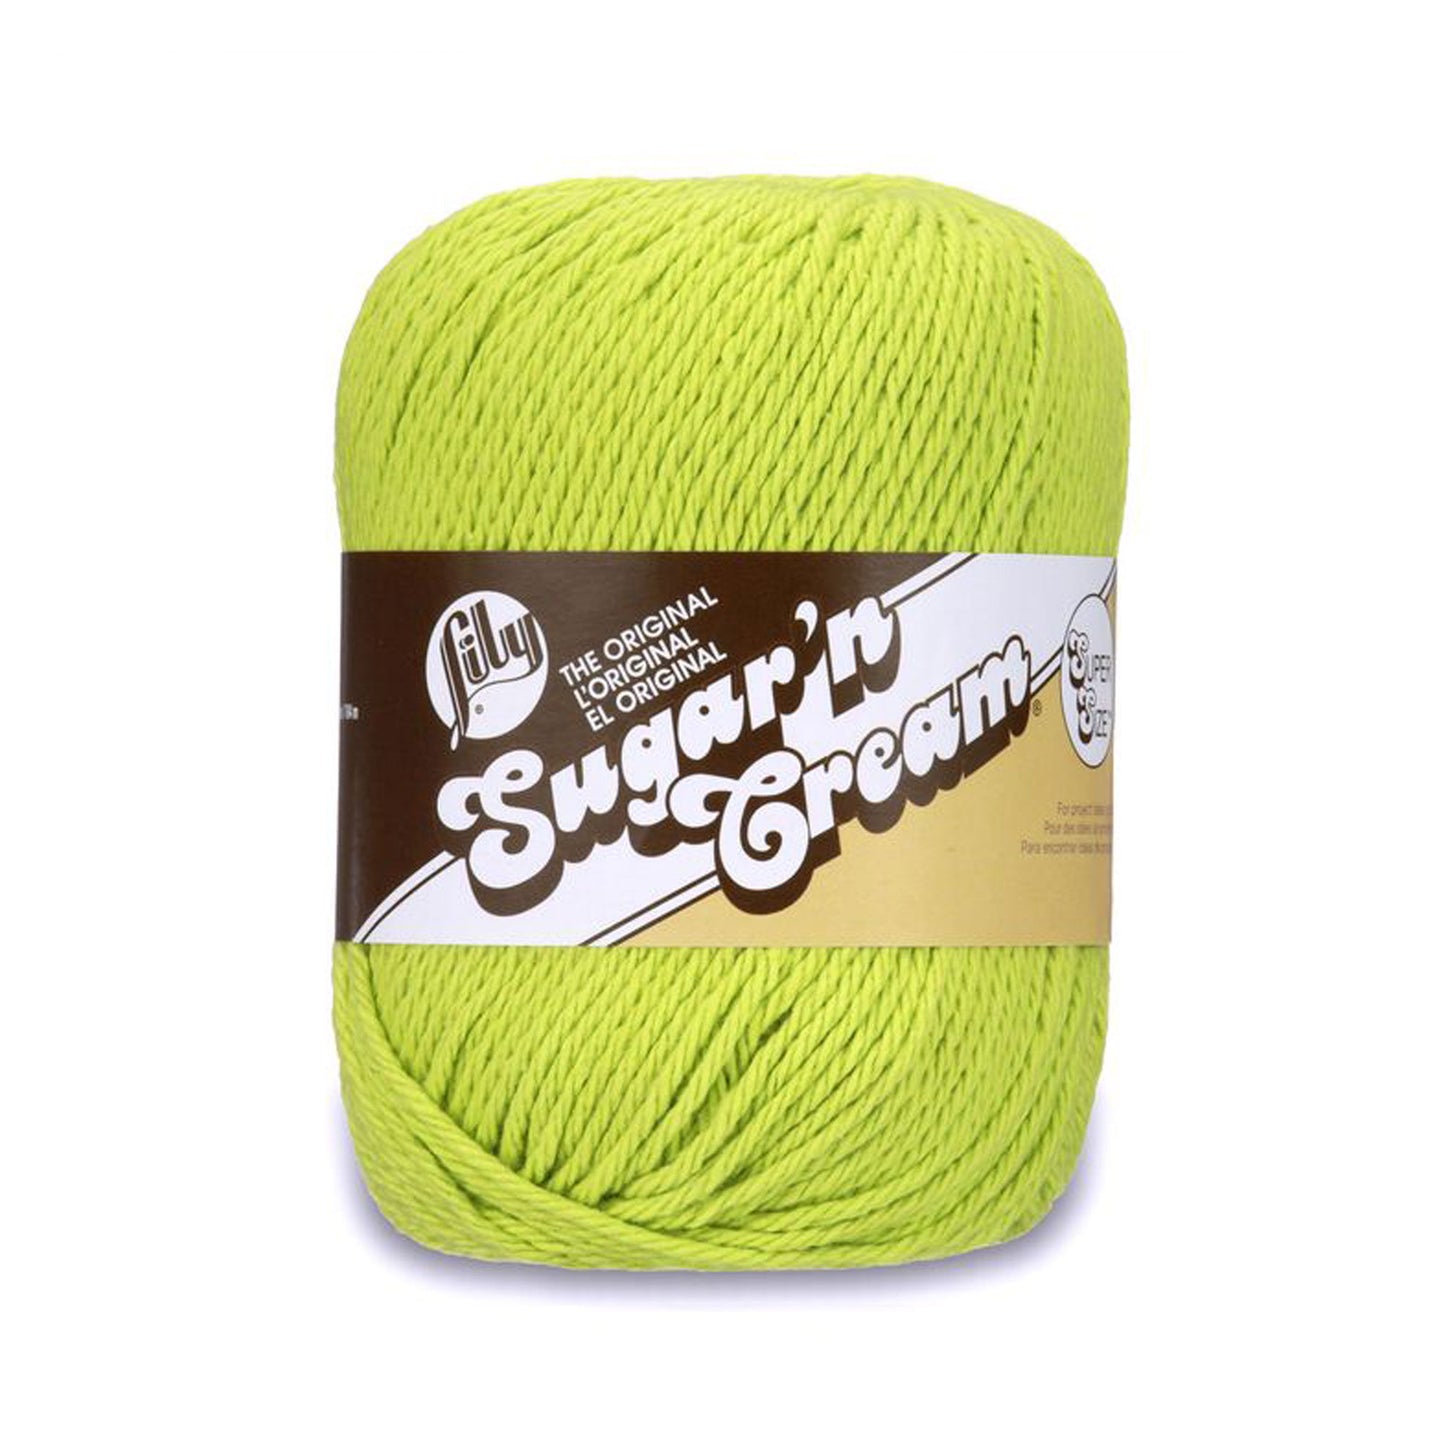 Lily Sugar'n Cream 100% Cotton yarn - Hot Green SUPER SIZE